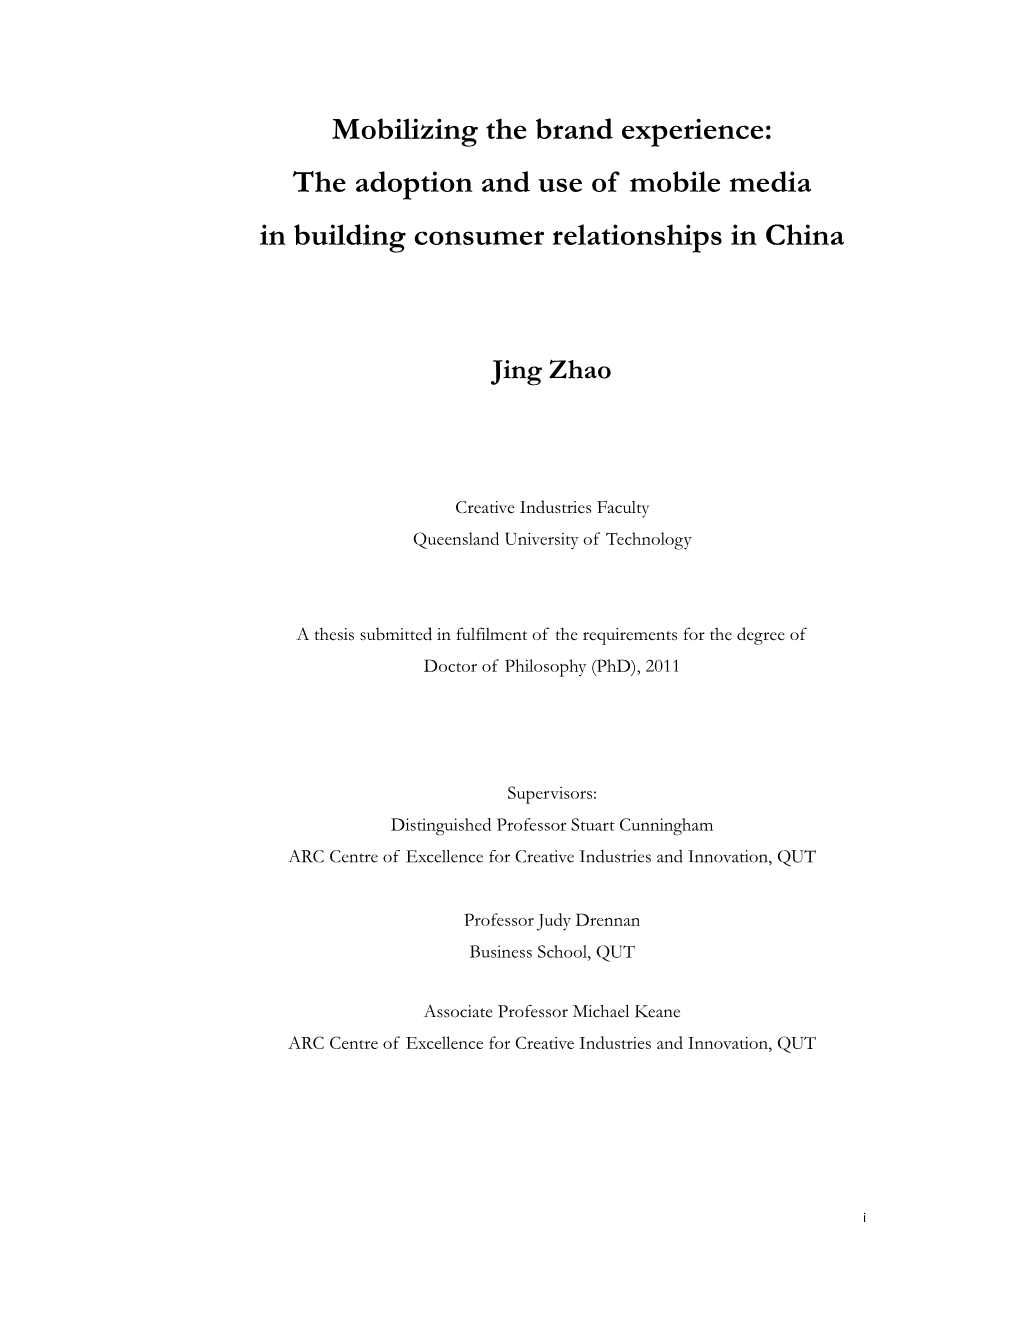 Jing Zhao Thesis (PDF 1MB)